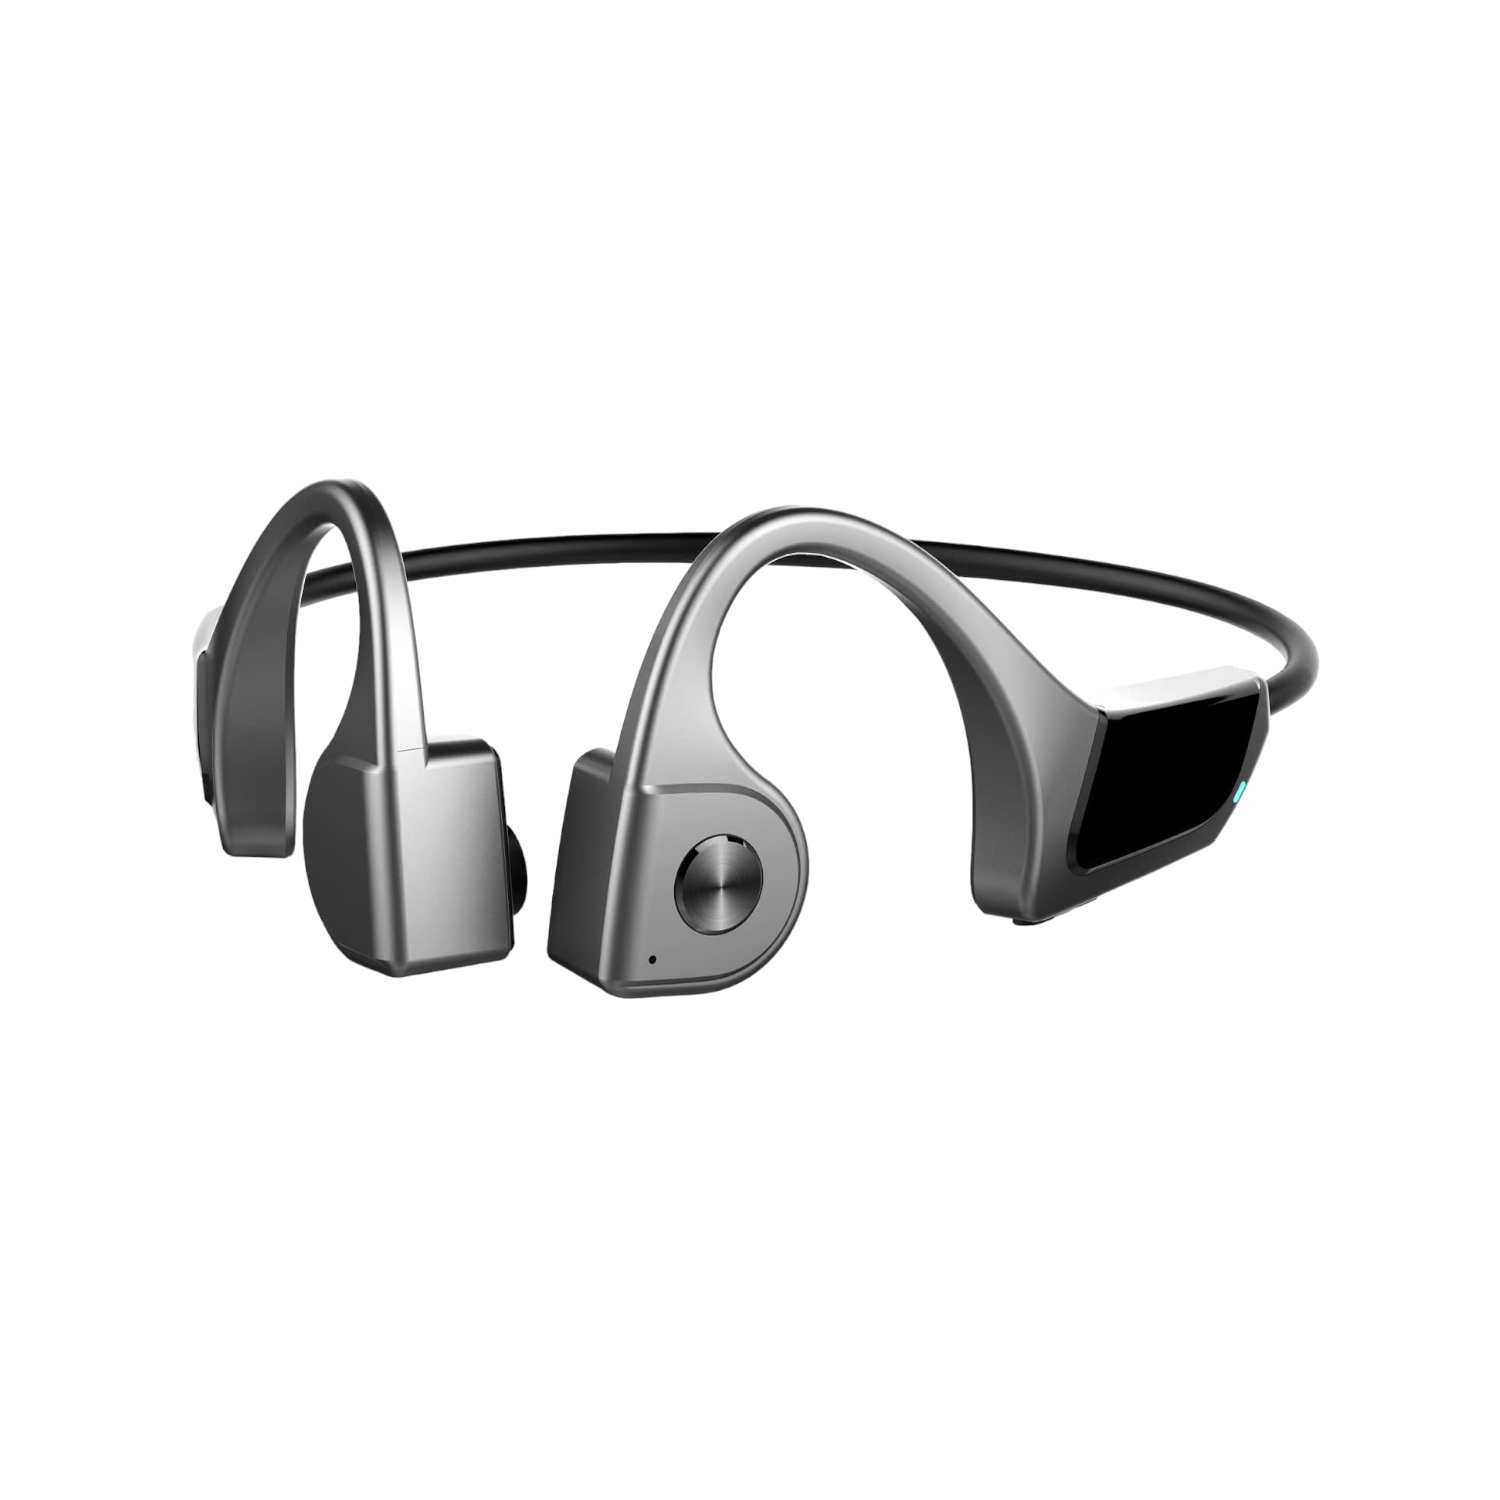 Wireless headphones - Neckband - F806 - 887561 - Grey